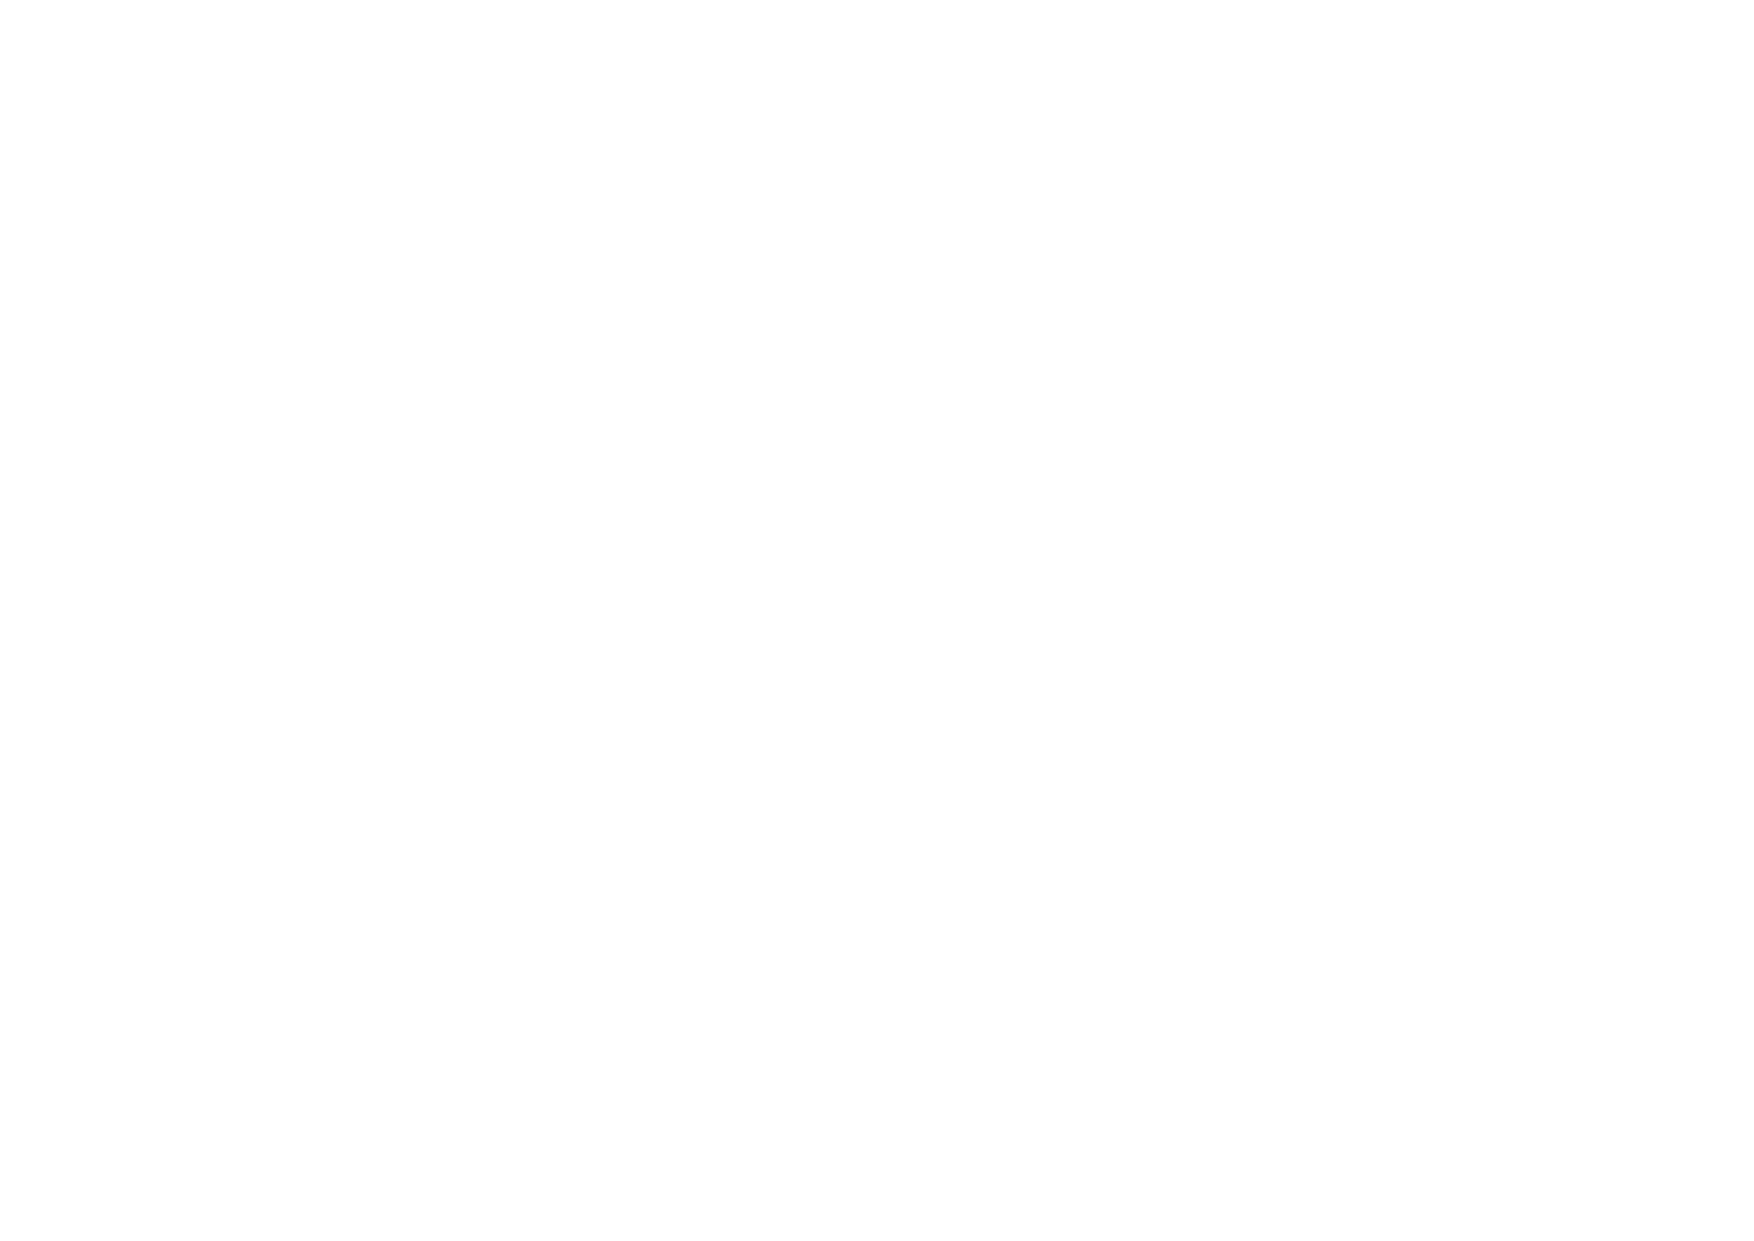 Erik Rulands Coaching